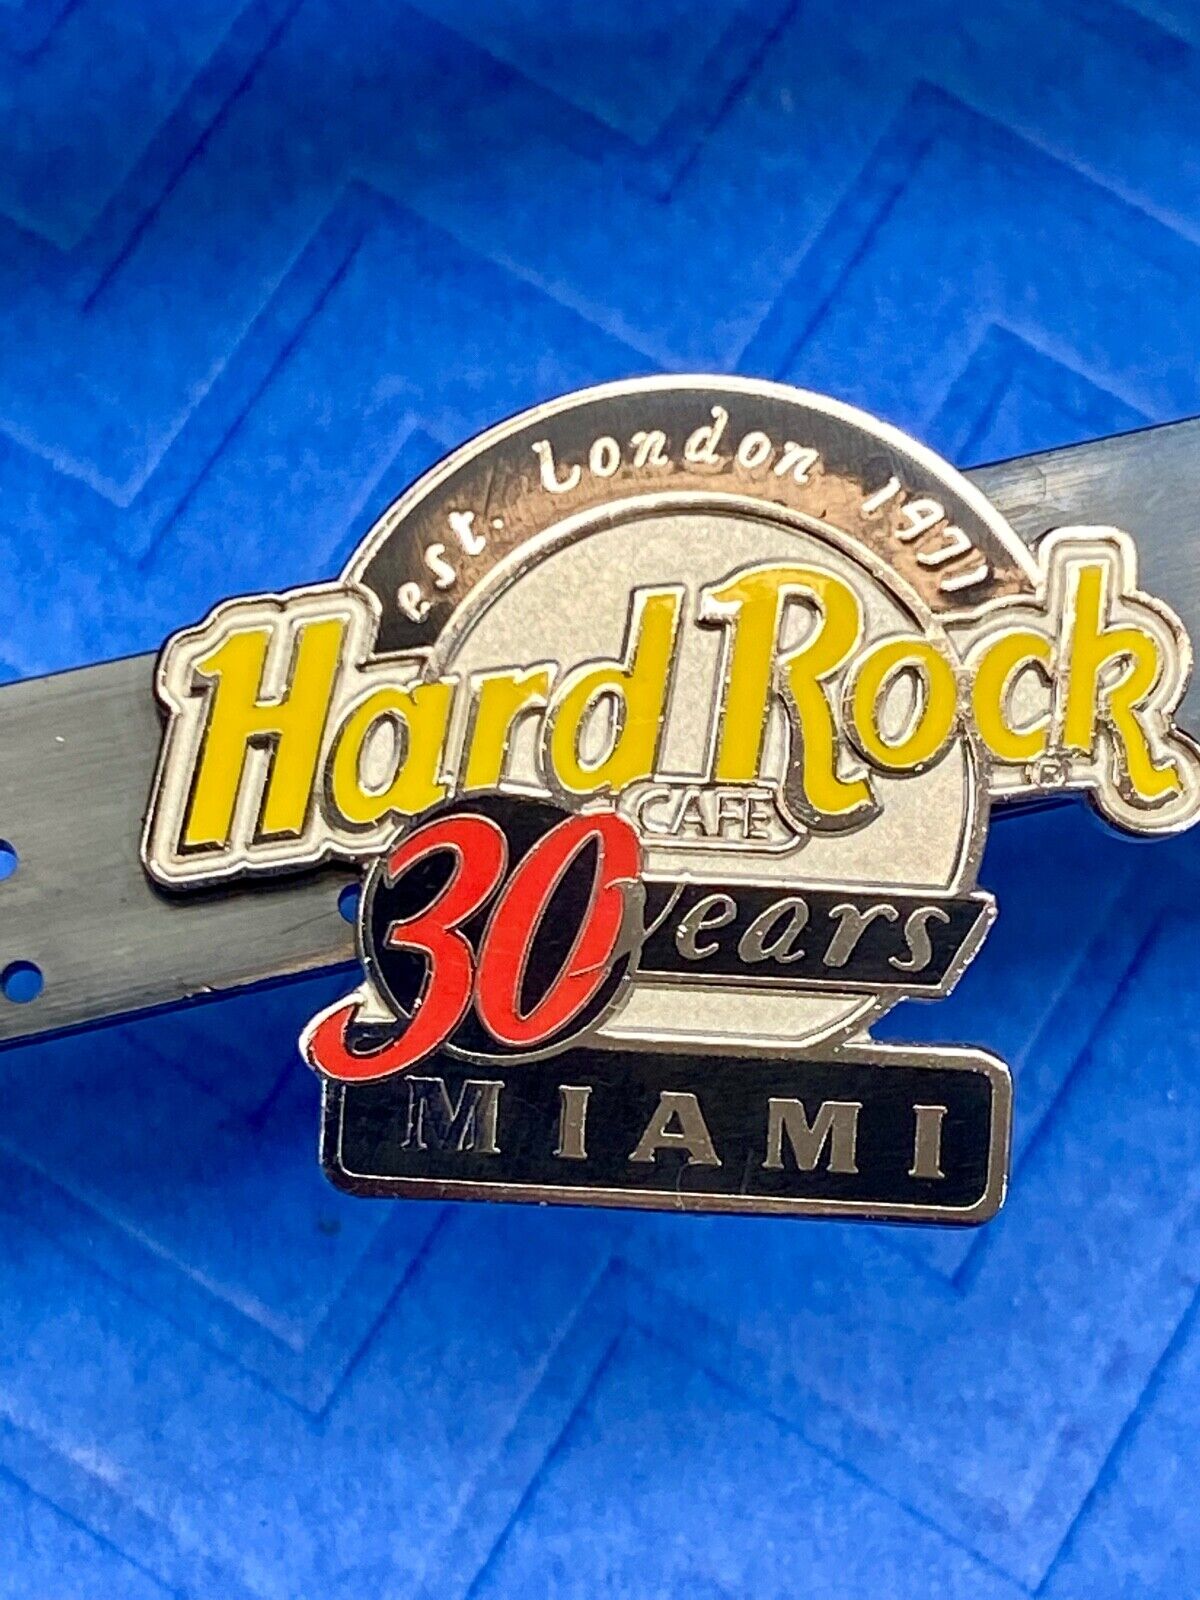 Hard Rock Cafe Collectors pin - Indianapolis 30 years, Miami Florida 